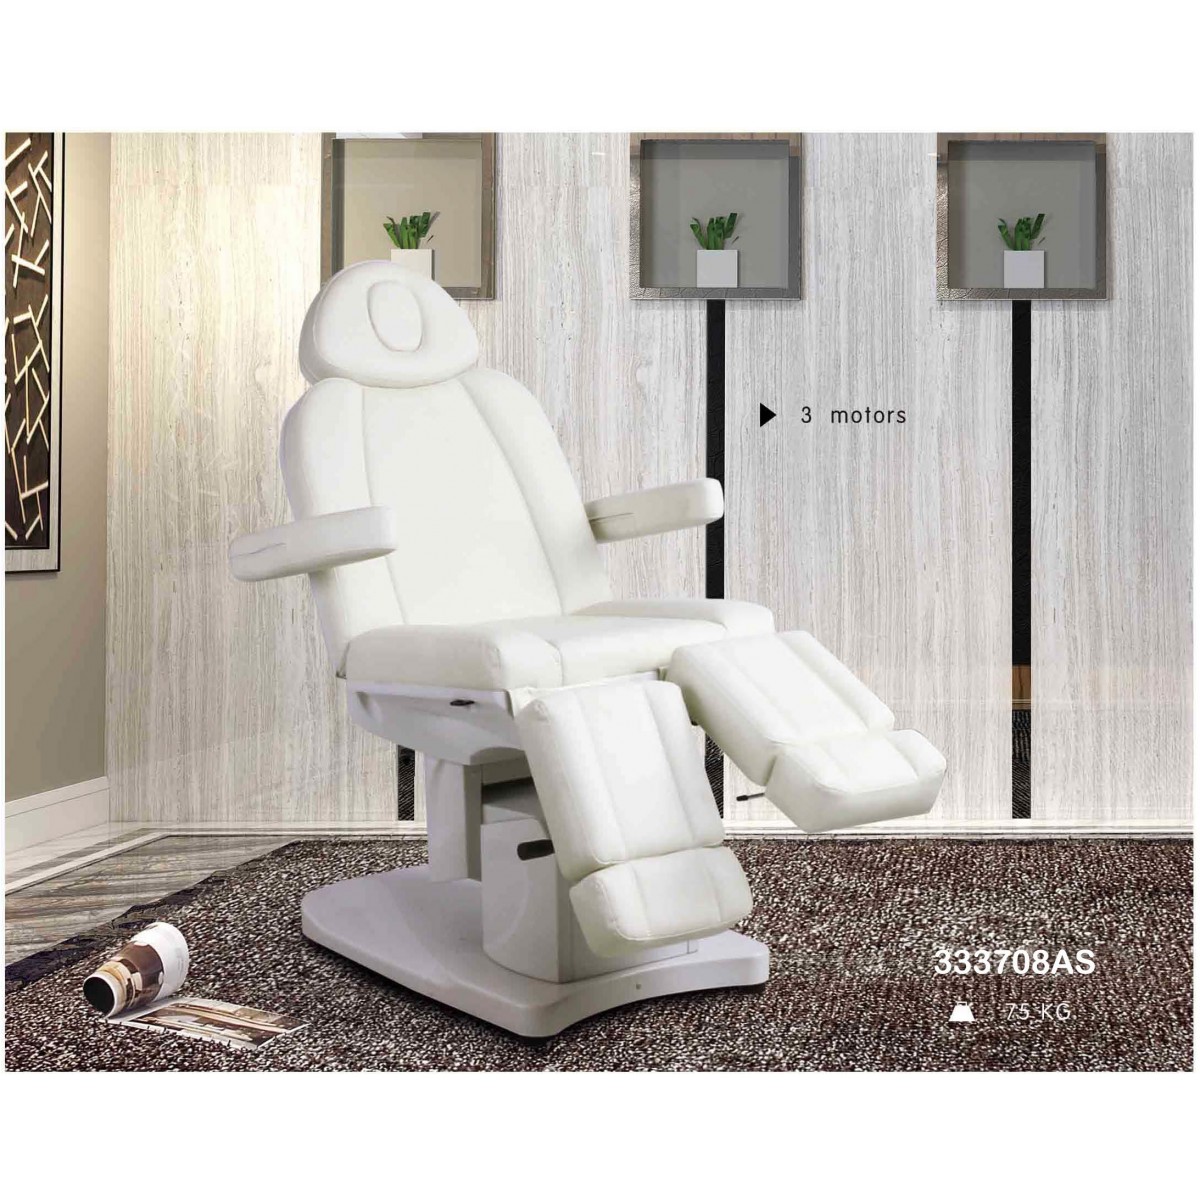 Futuris electric beauty salon facial bed, facial bed massage bed 